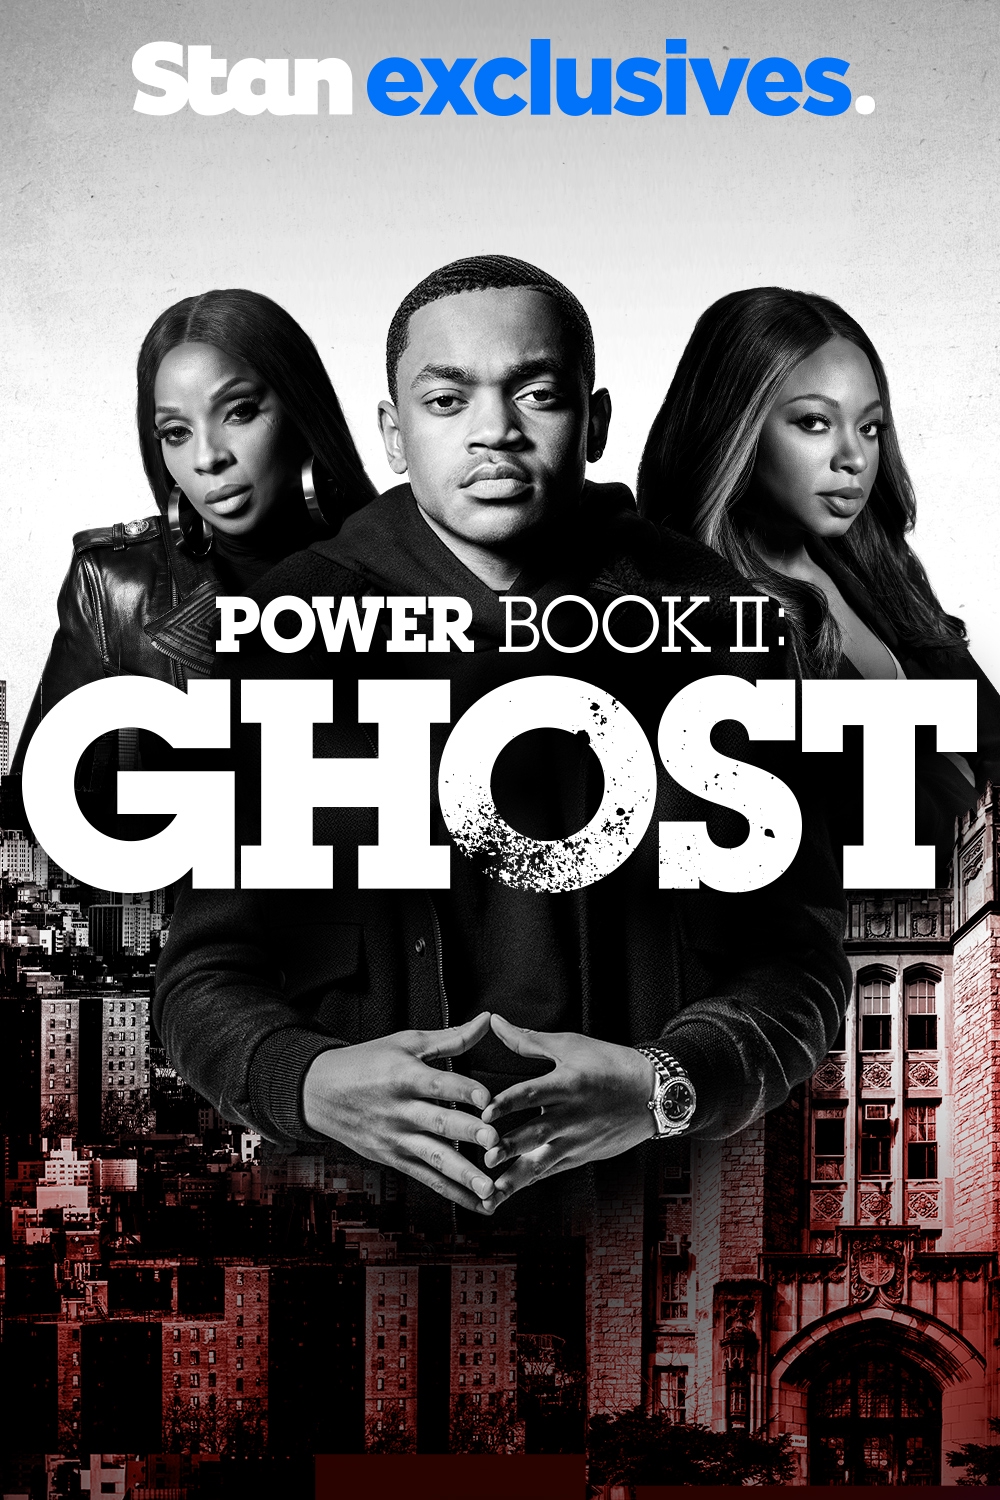 Power book 1. Power книга. Power book II: Ghost. Власть в ночном городе книга 2 призрак.